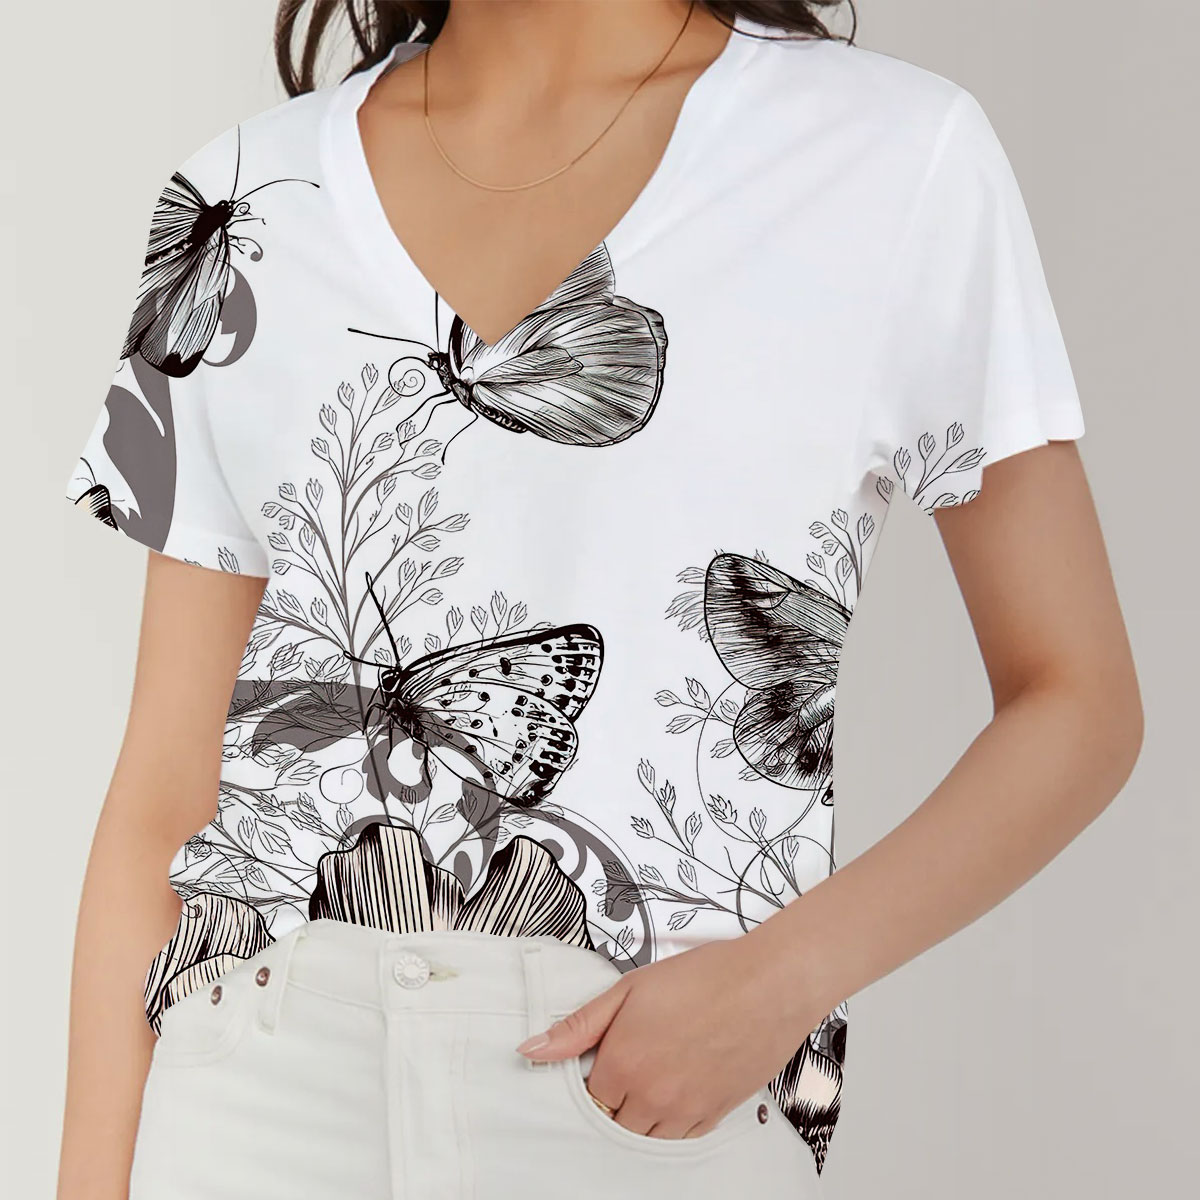 Flower And Butterfly V-Neck Women's T-Shirt